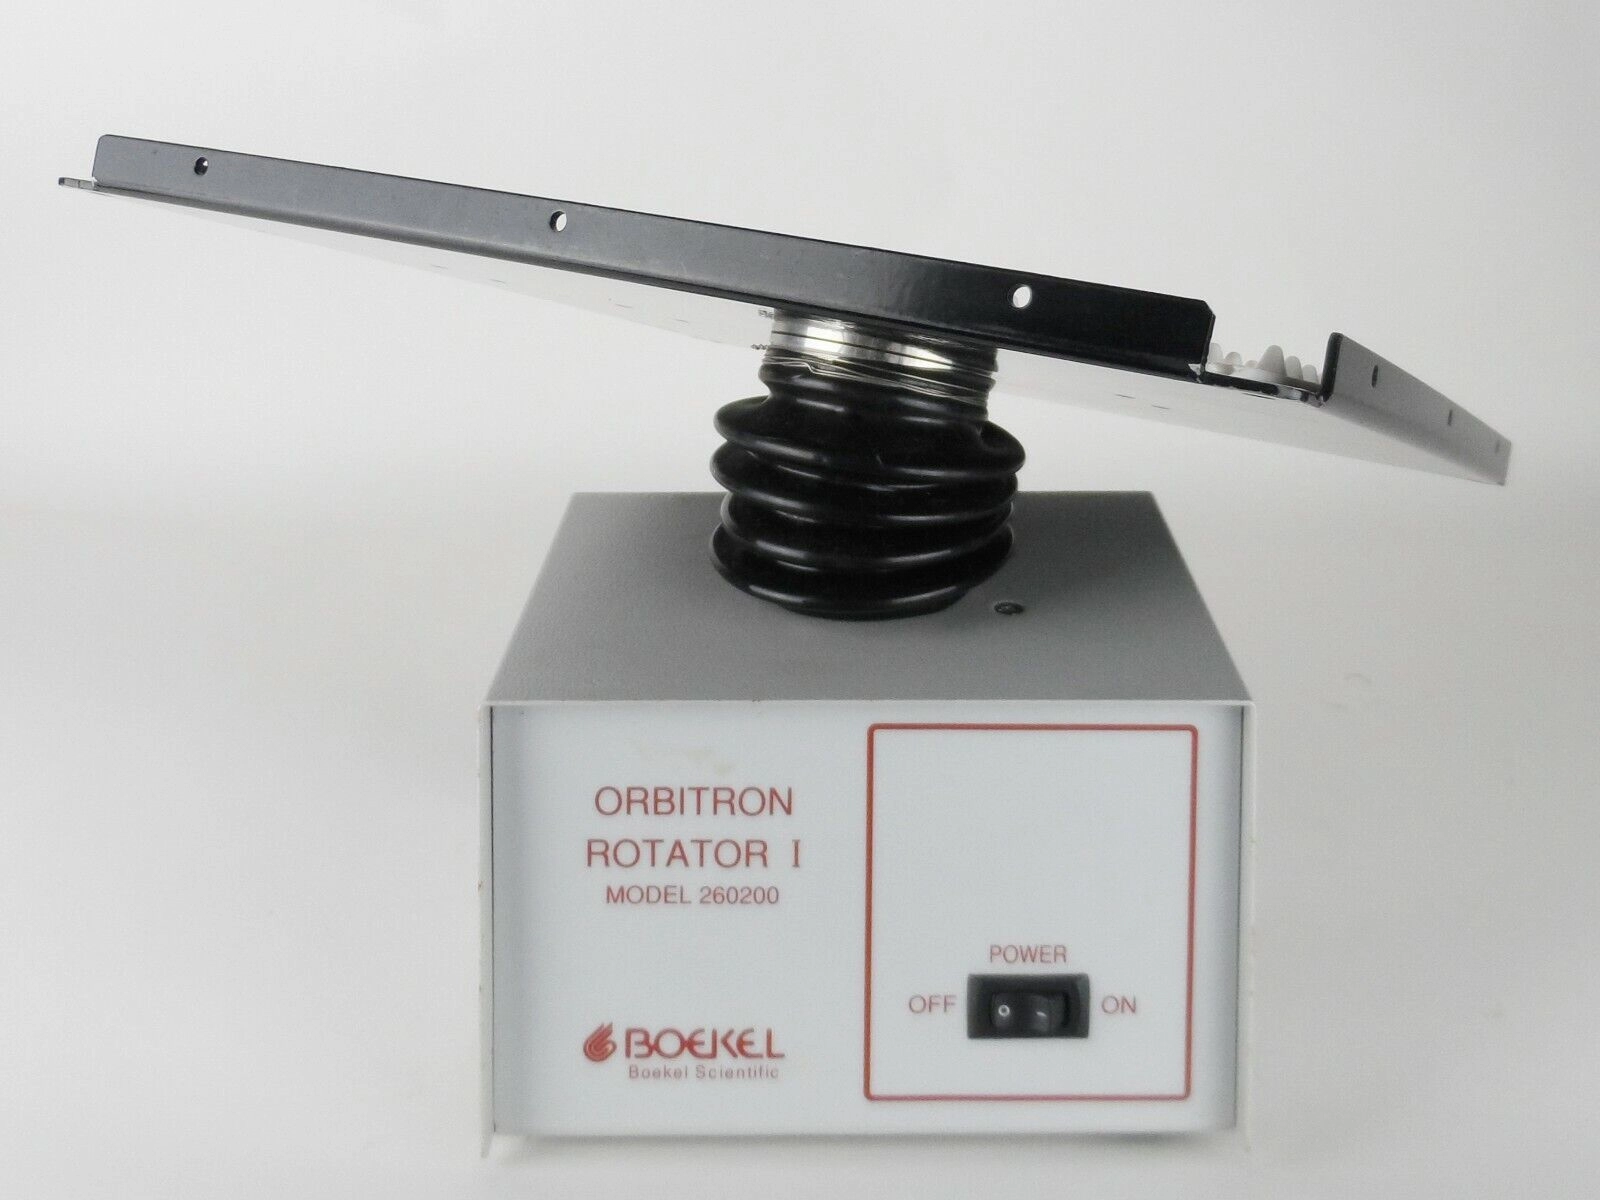 Boekel Orbitron Rotator I 260200